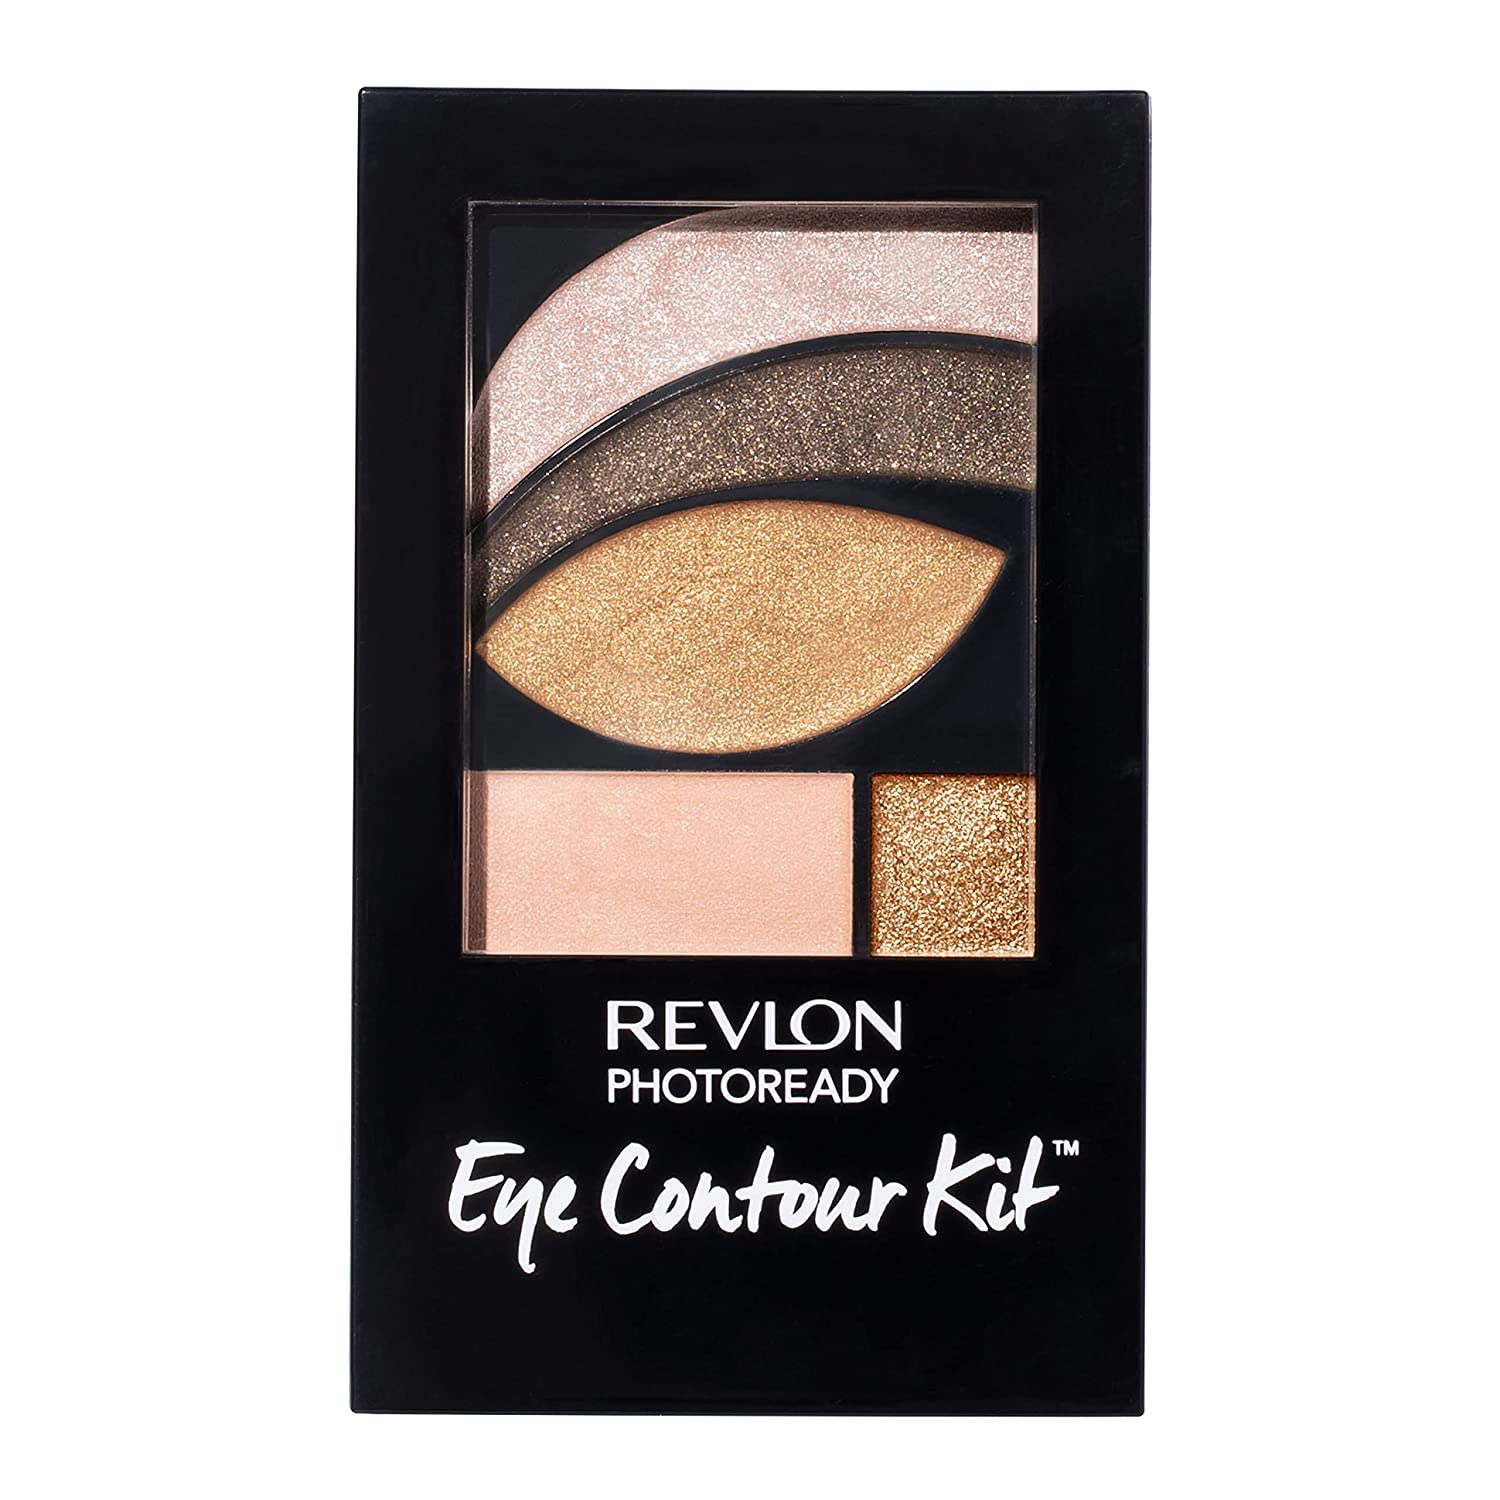 Revlon PhotoReady Eye Contour Kit, Eyeshadow Palette with 5 Wet/Dry Shades & Double-Ended Brush Applicator, Rustic (523), 0.1oz $2.25